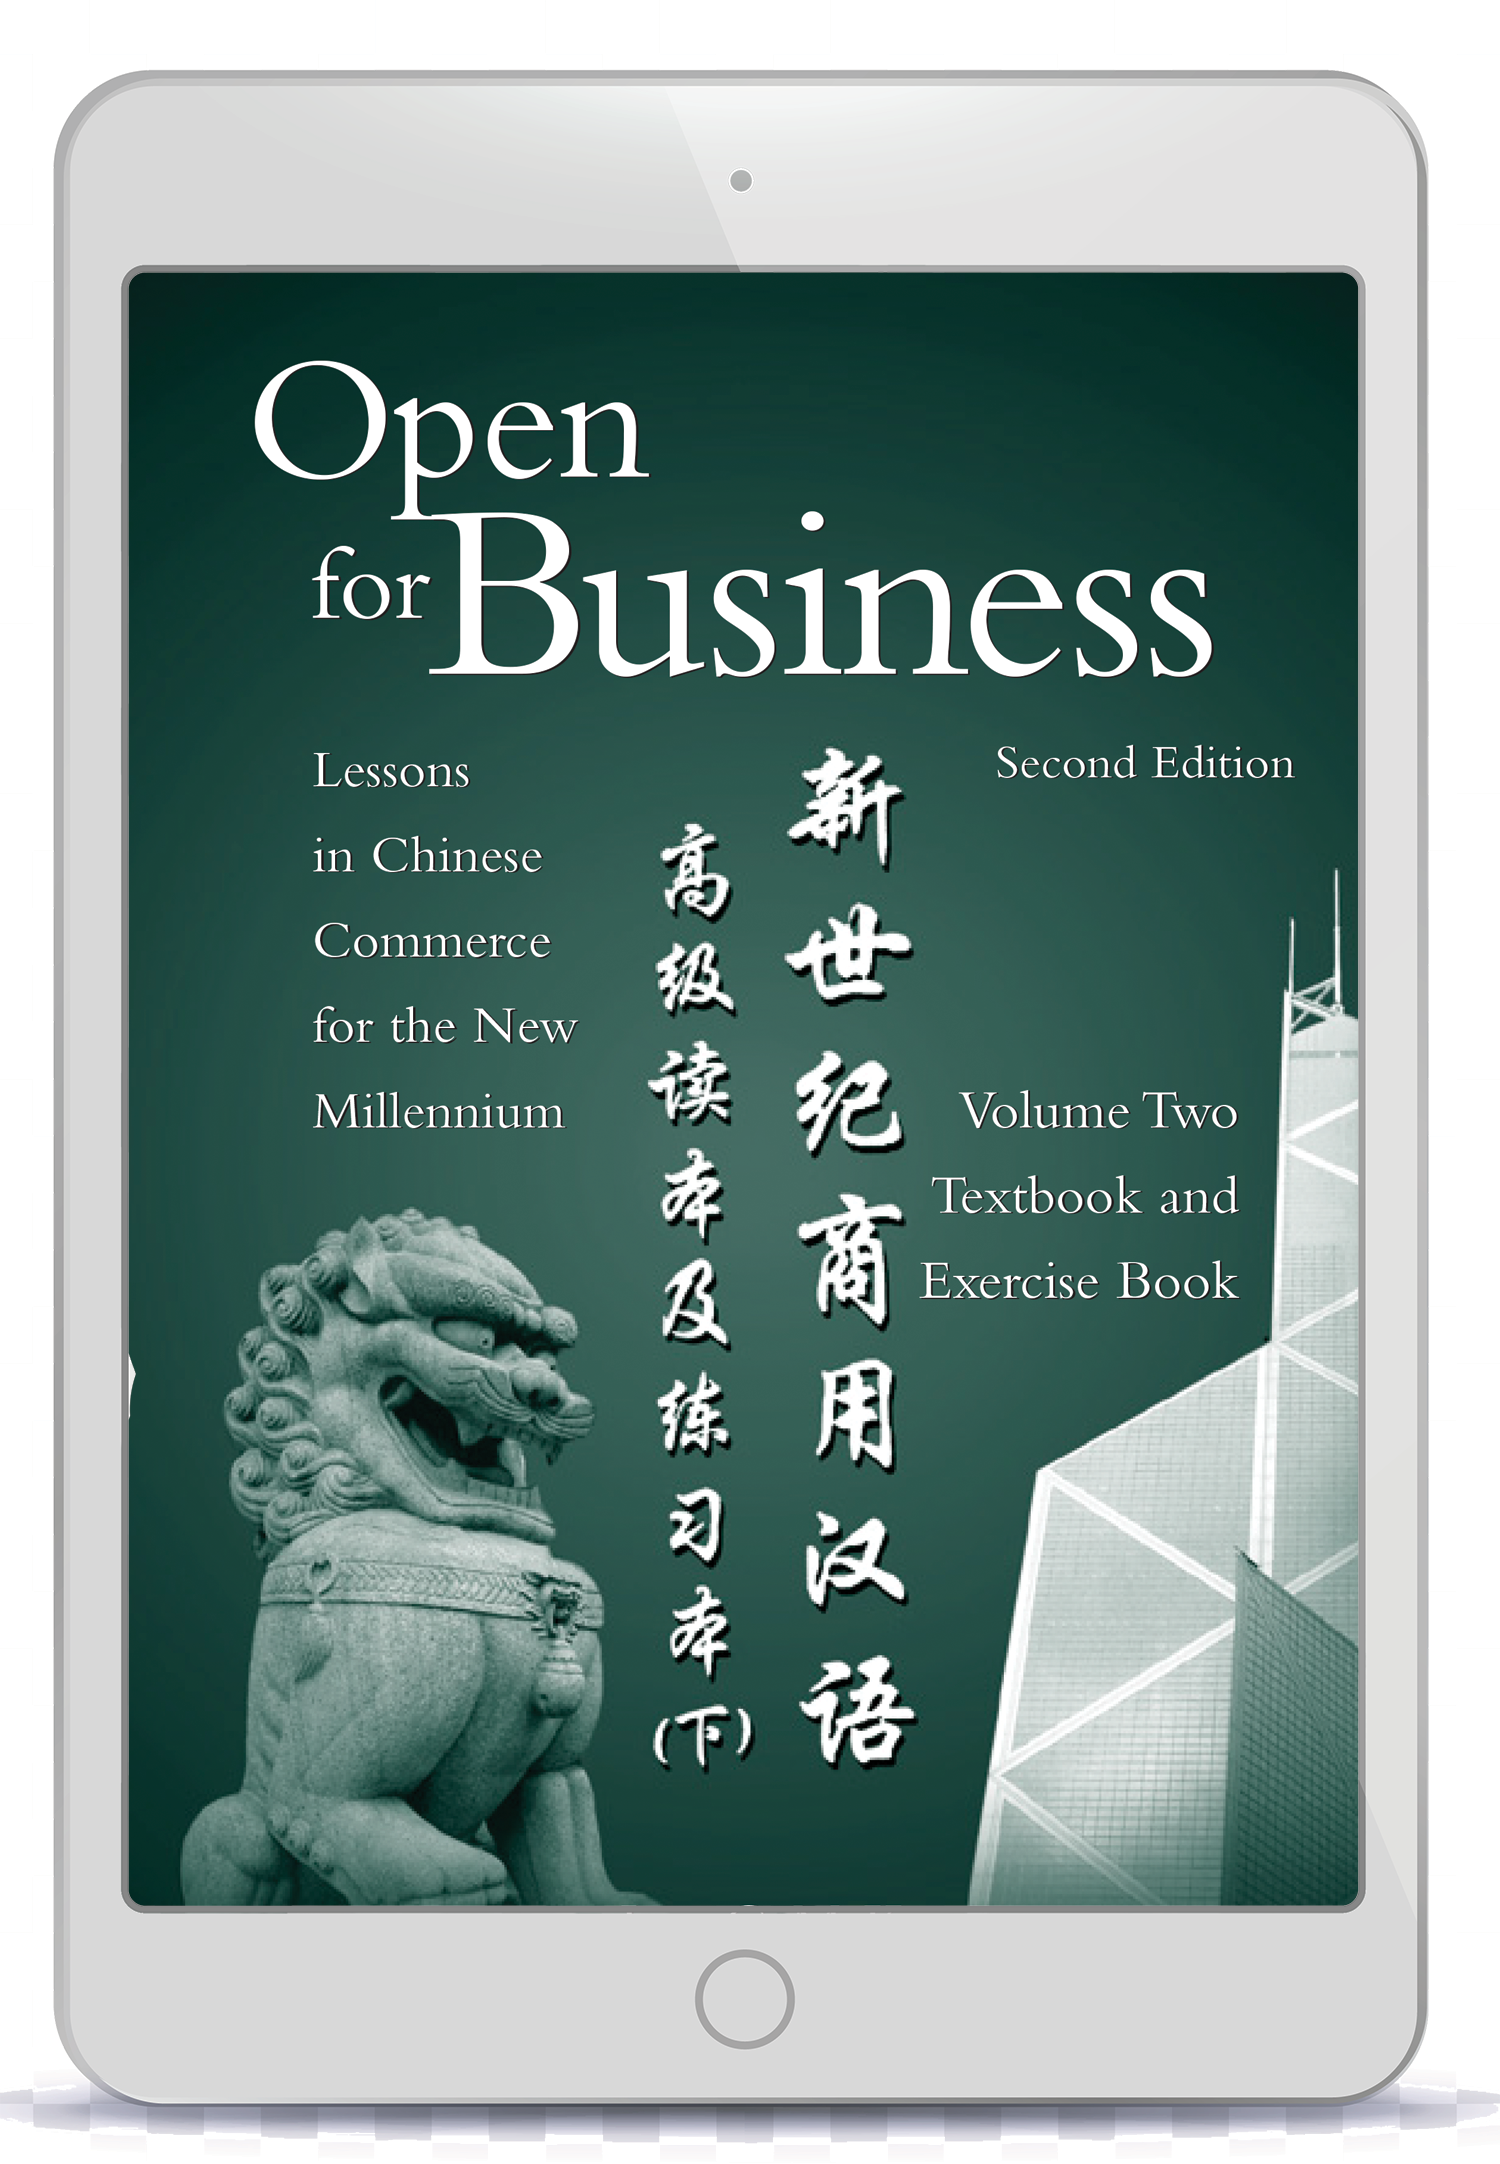 Open for Business Volume 2 e-book